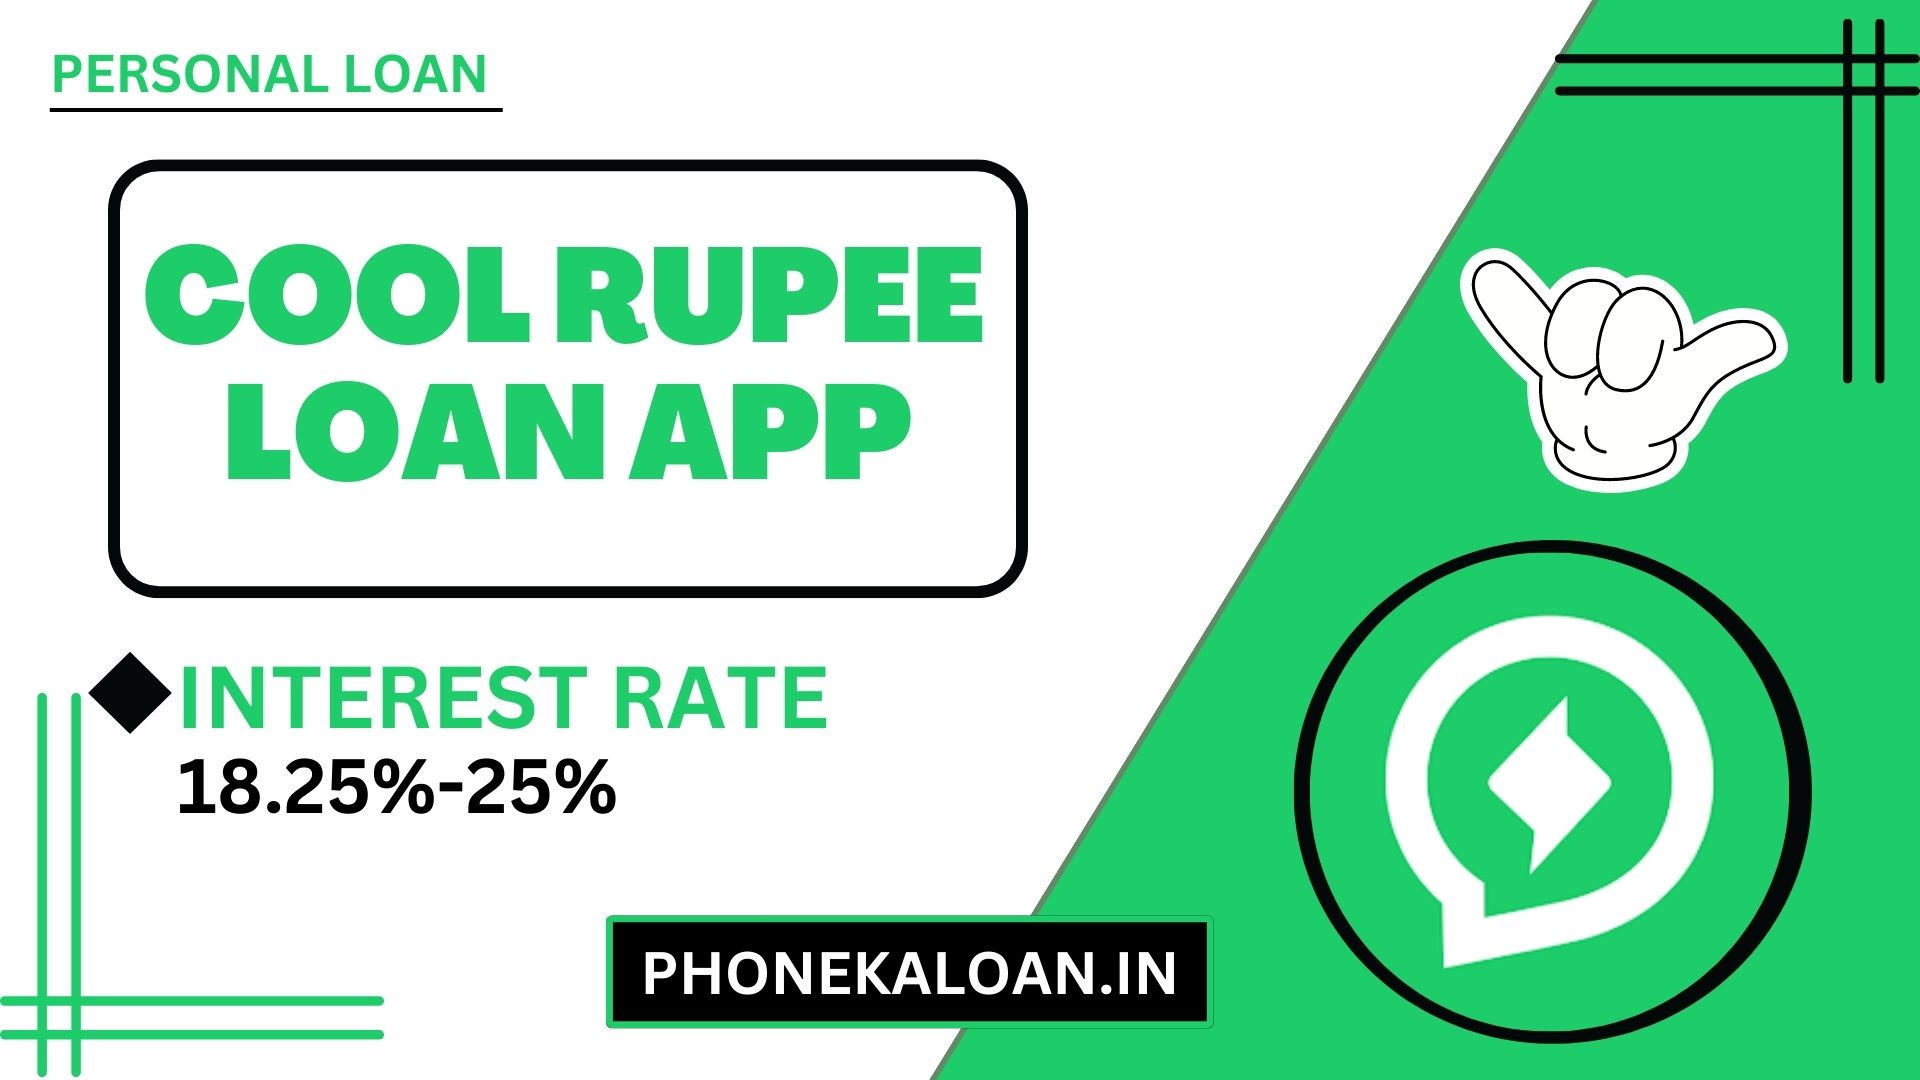 Cool Rupee Loan App Interest Rate